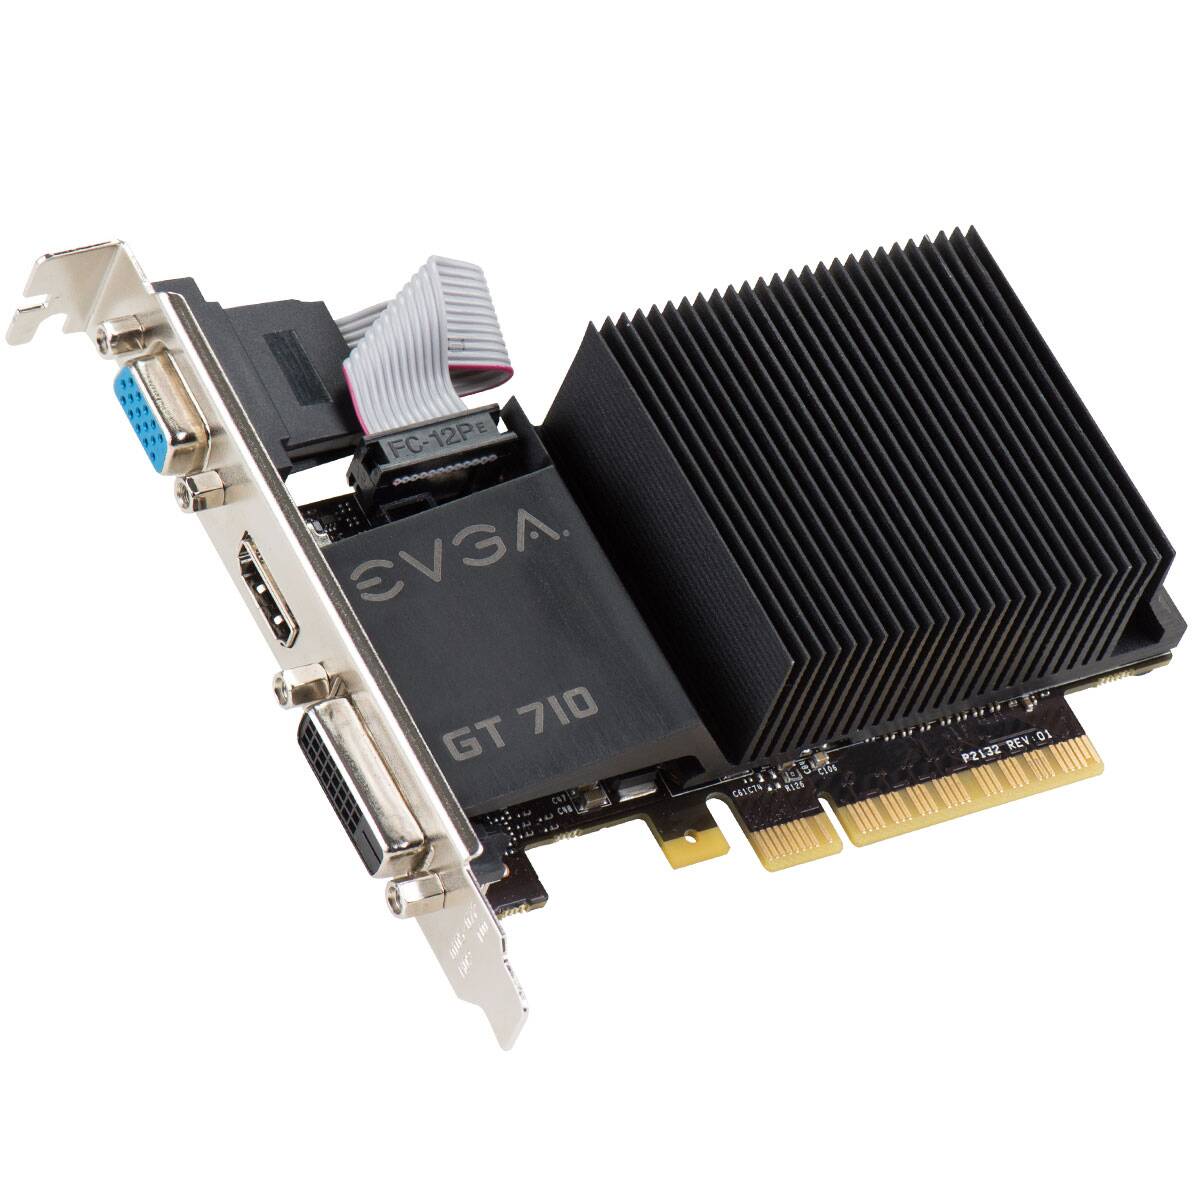 PCI 2GB GDDR3 VGA, DVI, HDMI, 1x GPU 1S E GT710 2GB Graphic Card EVGA 02G-P3-2713-KR DDR3 